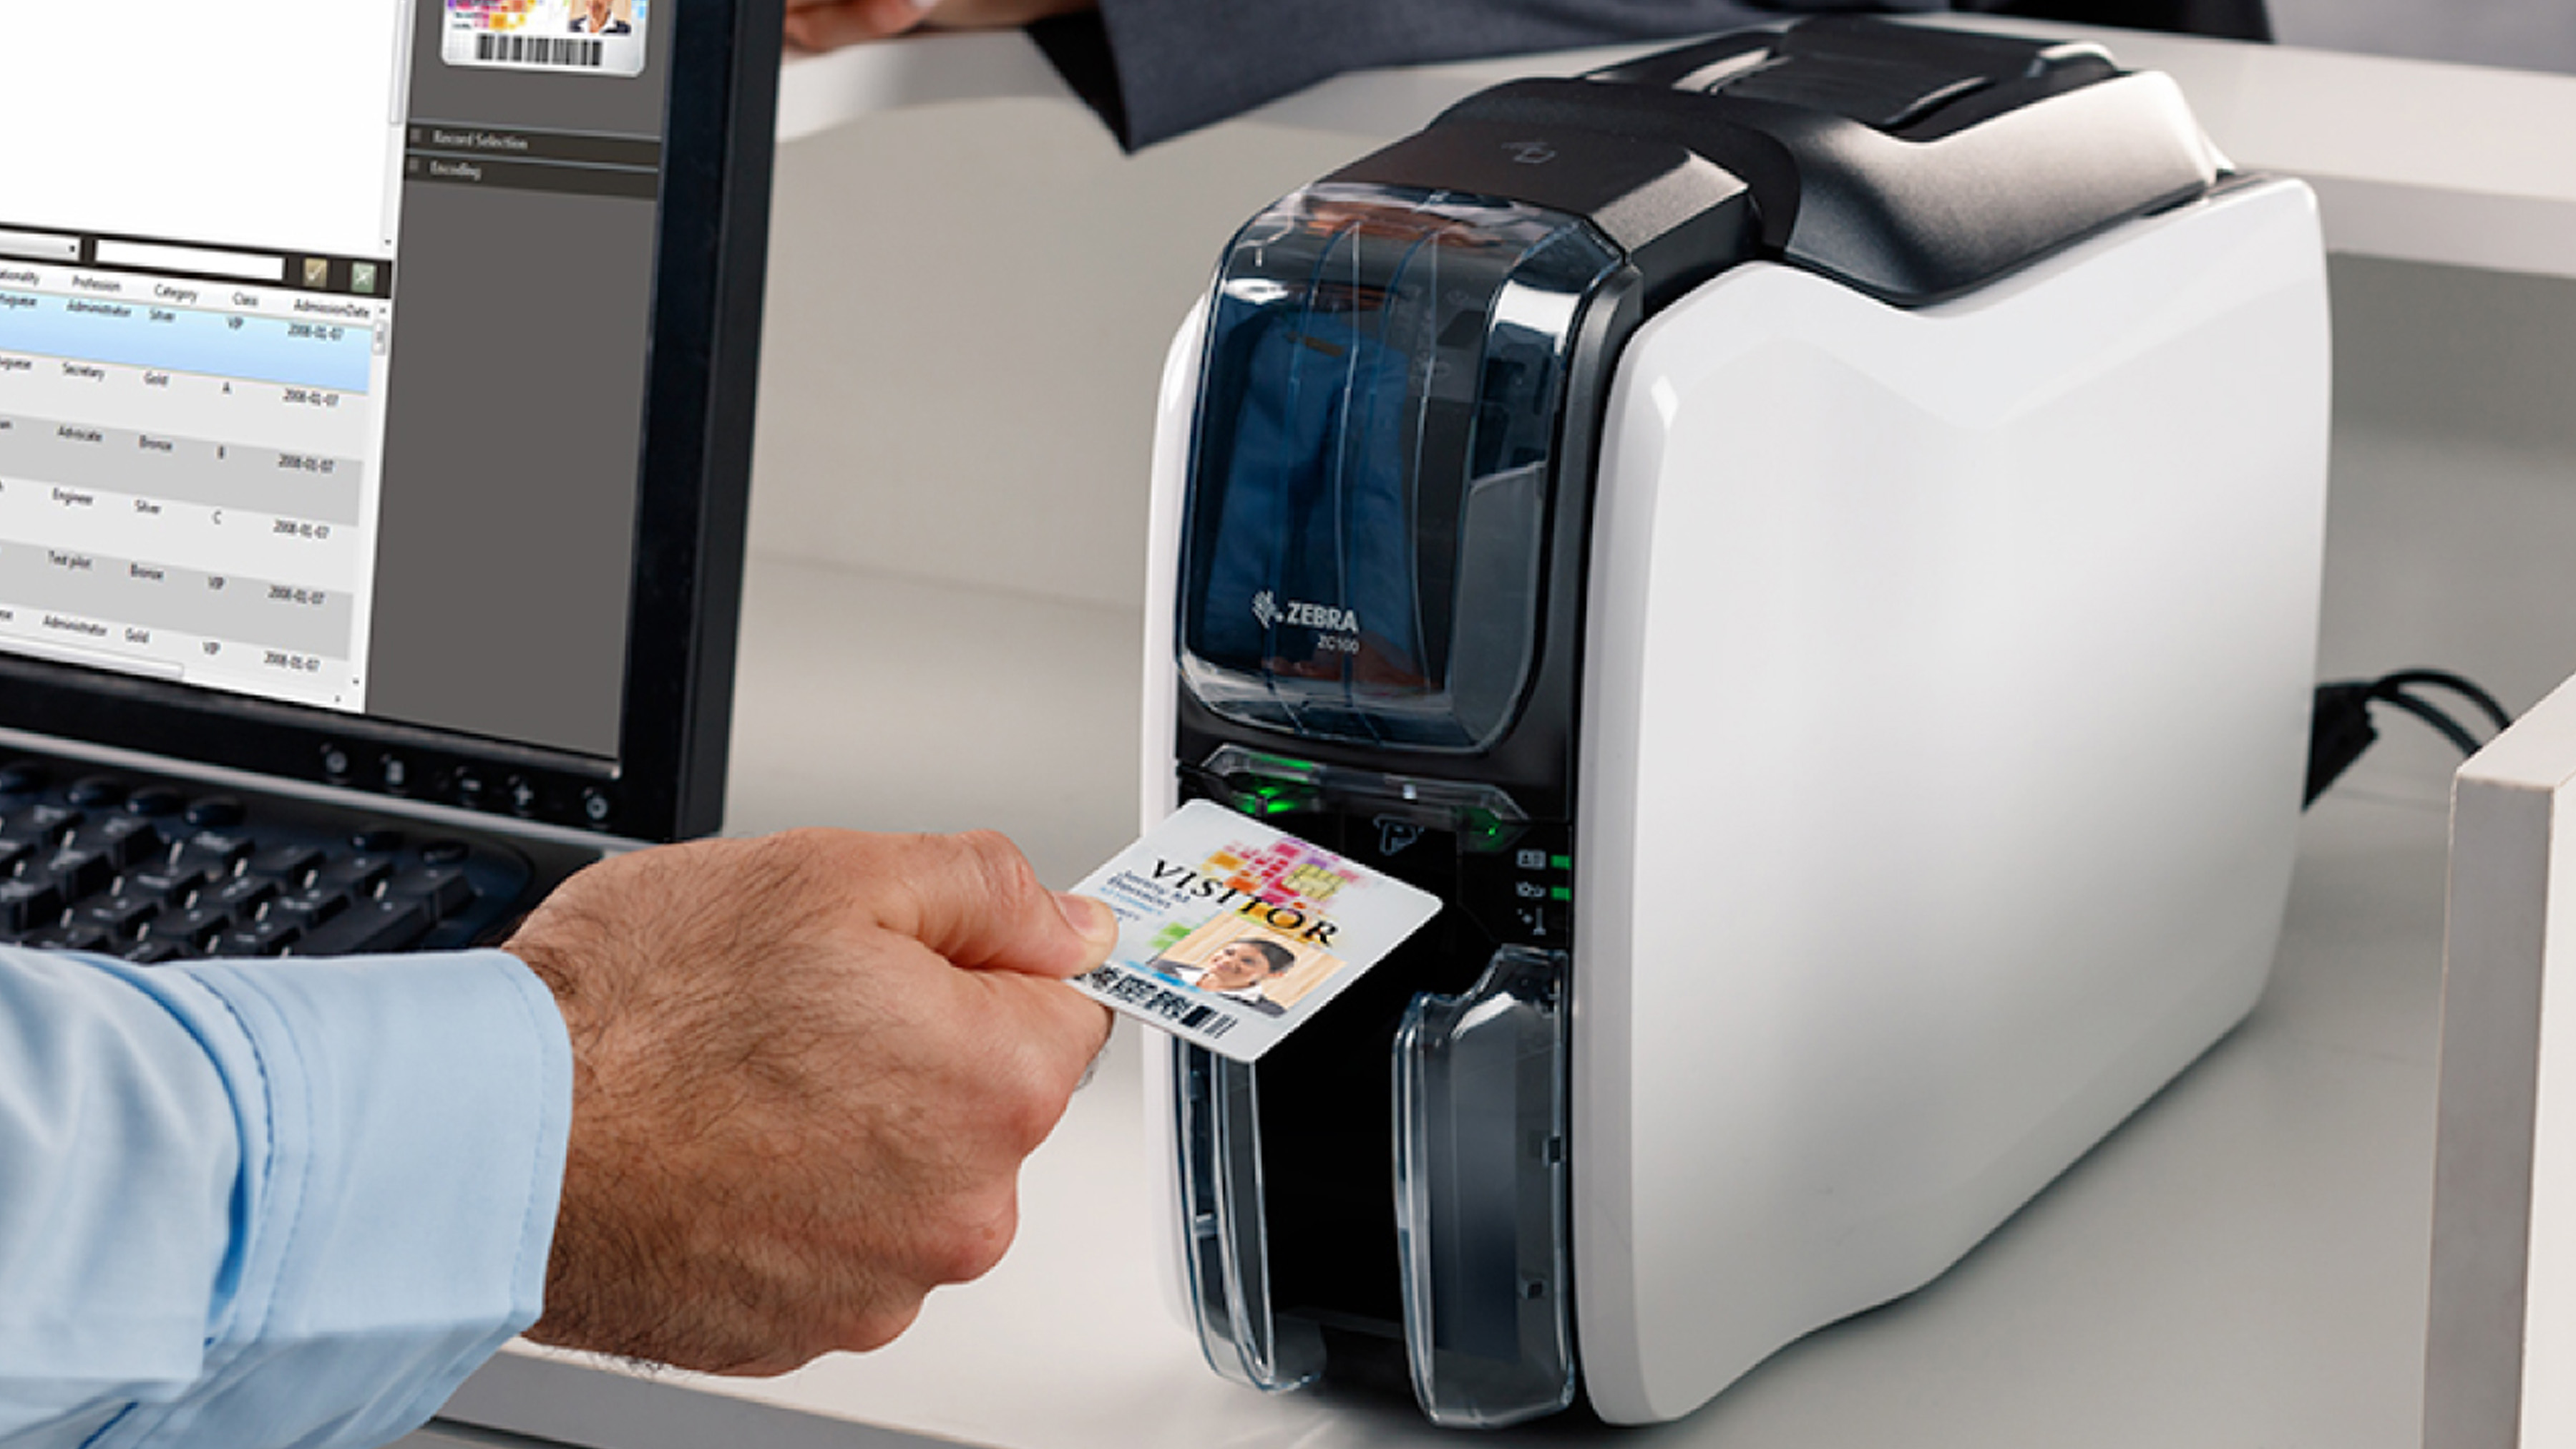 Zebra card printer printing an ID badge.